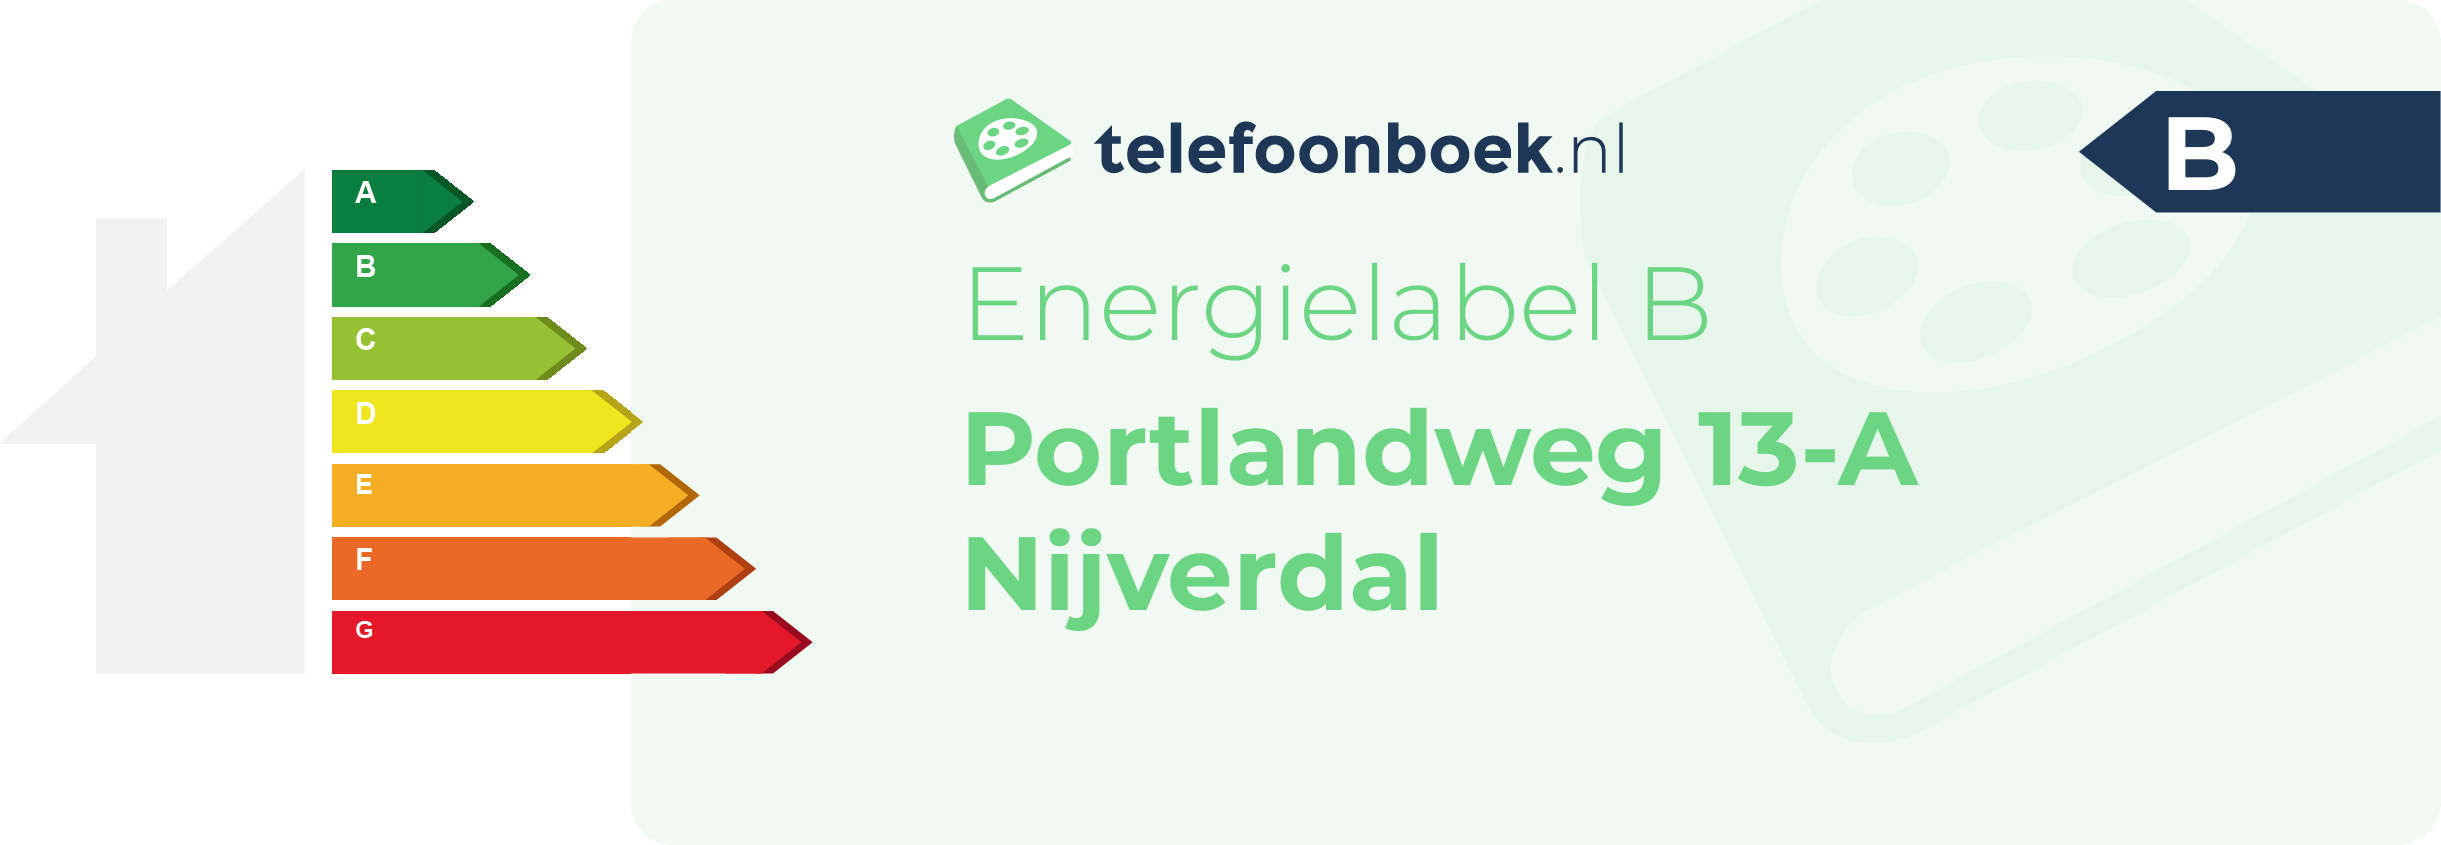 Energielabel Portlandweg 13-A Nijverdal